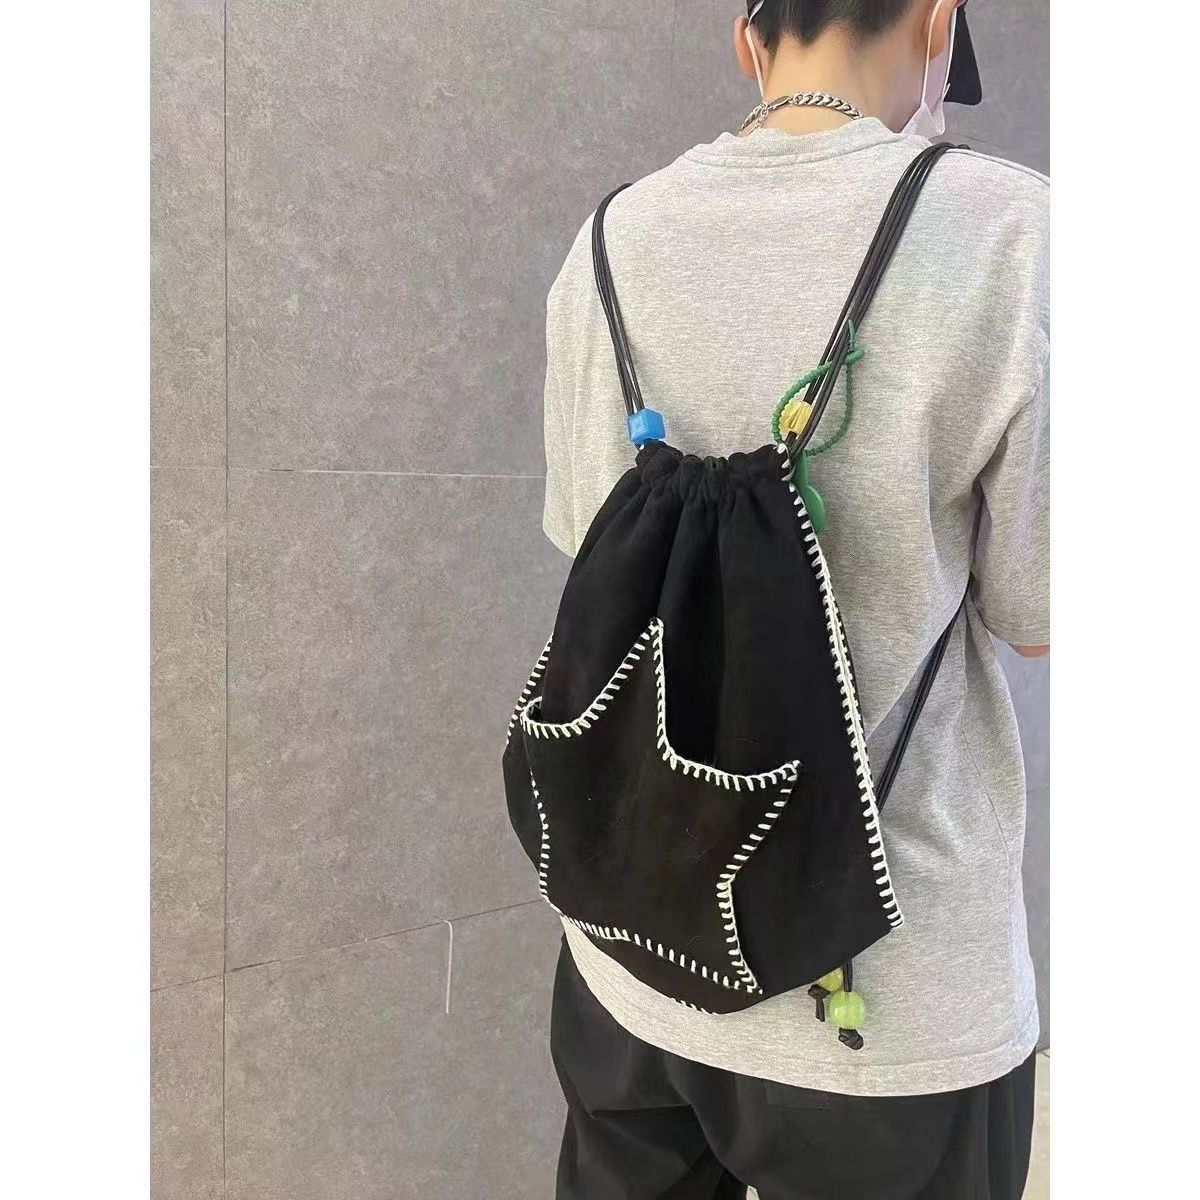  New Niche Black Star Drawstring Backpack Messenger Bag Various Carrying Methods